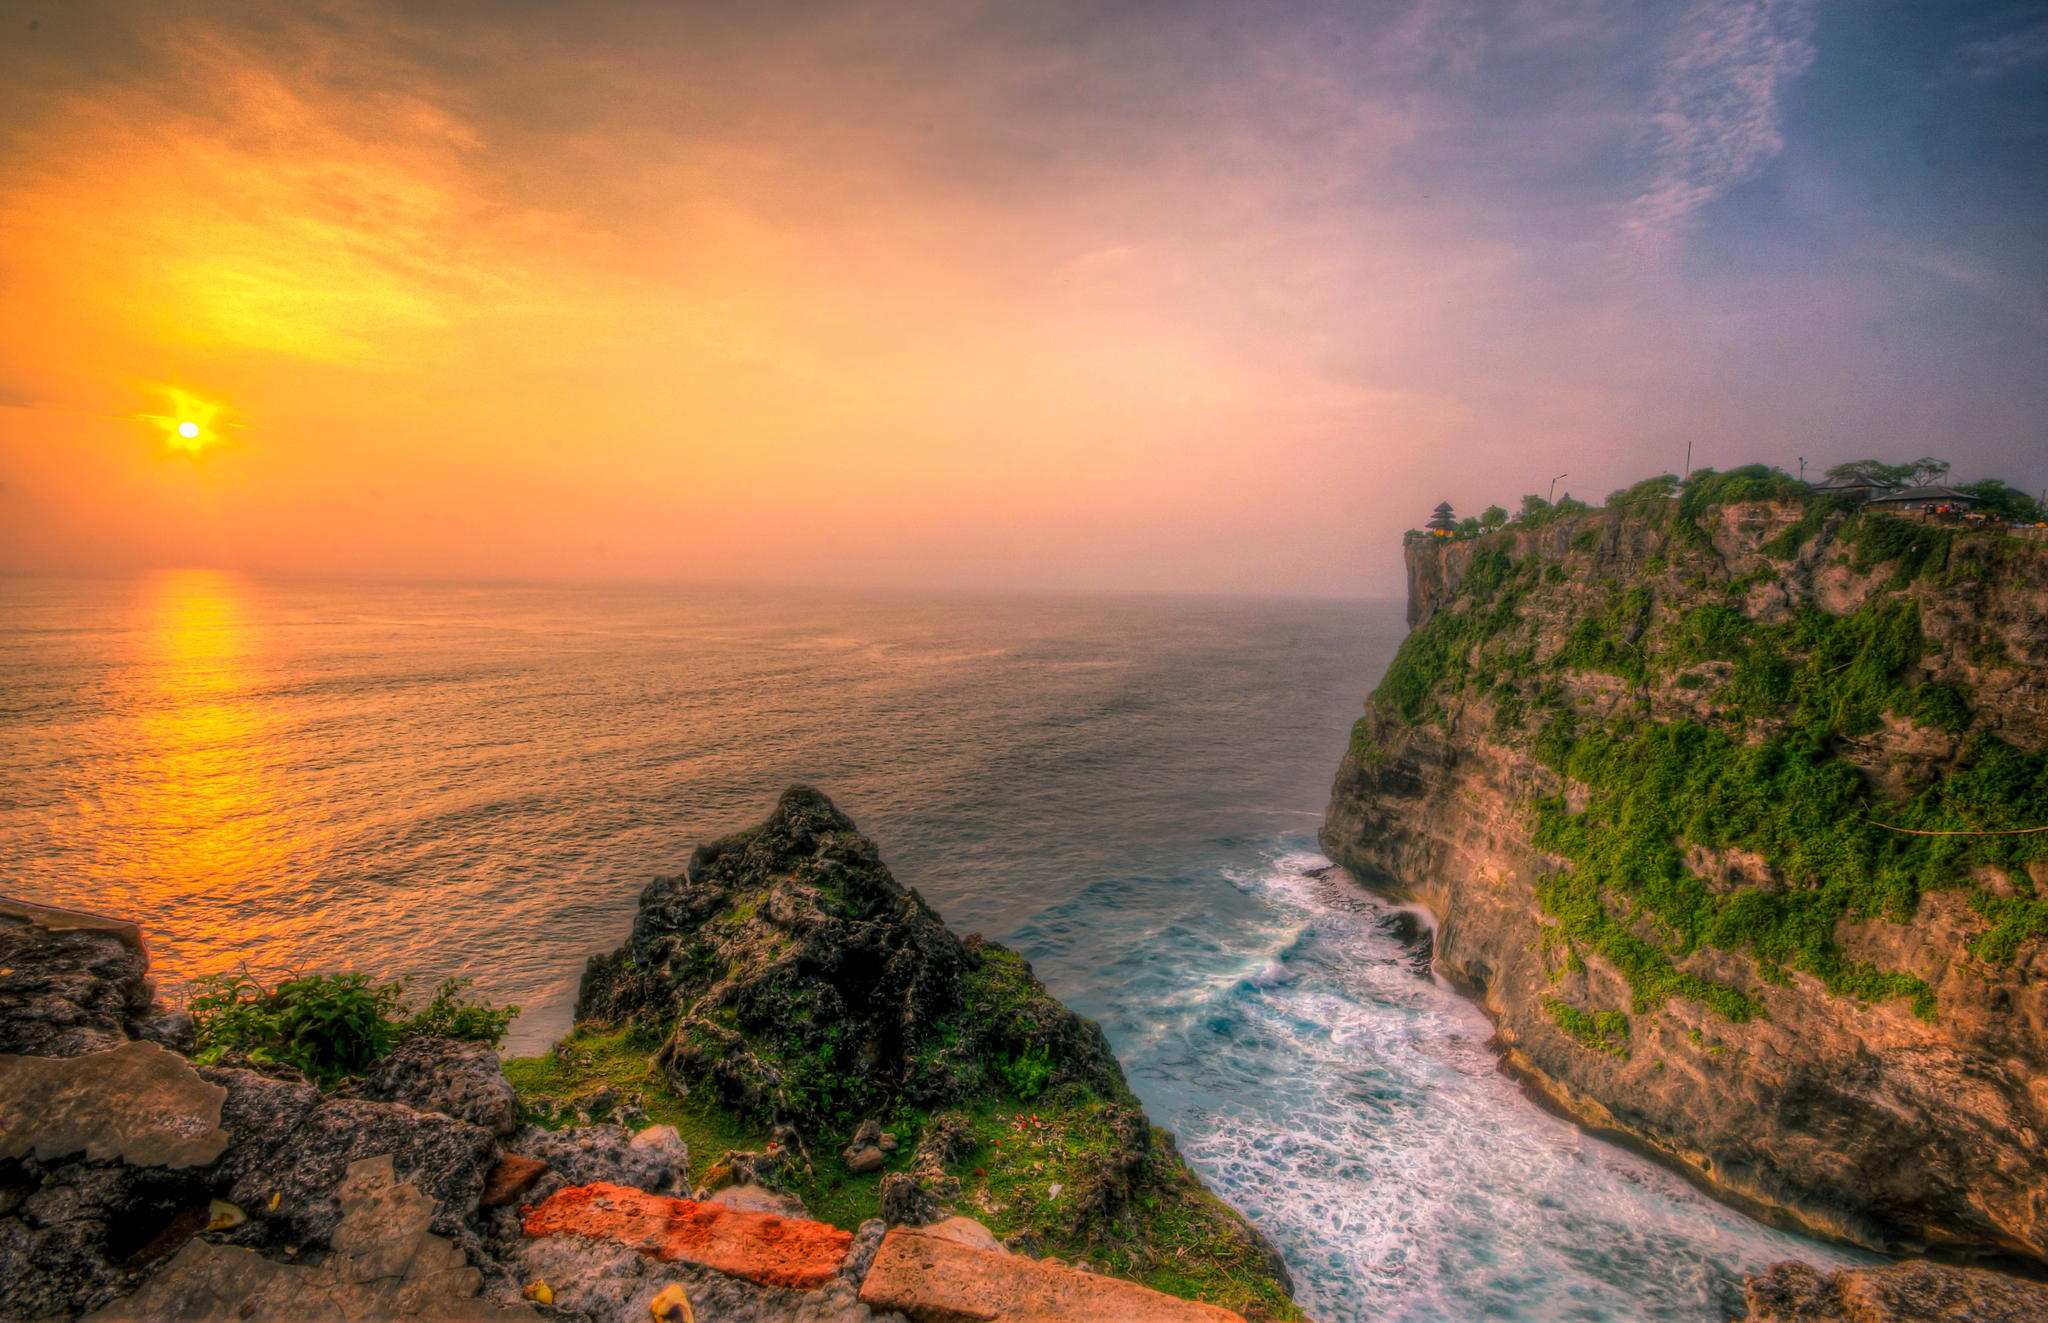 Sunset Bali Tour | Bali Tour Operators